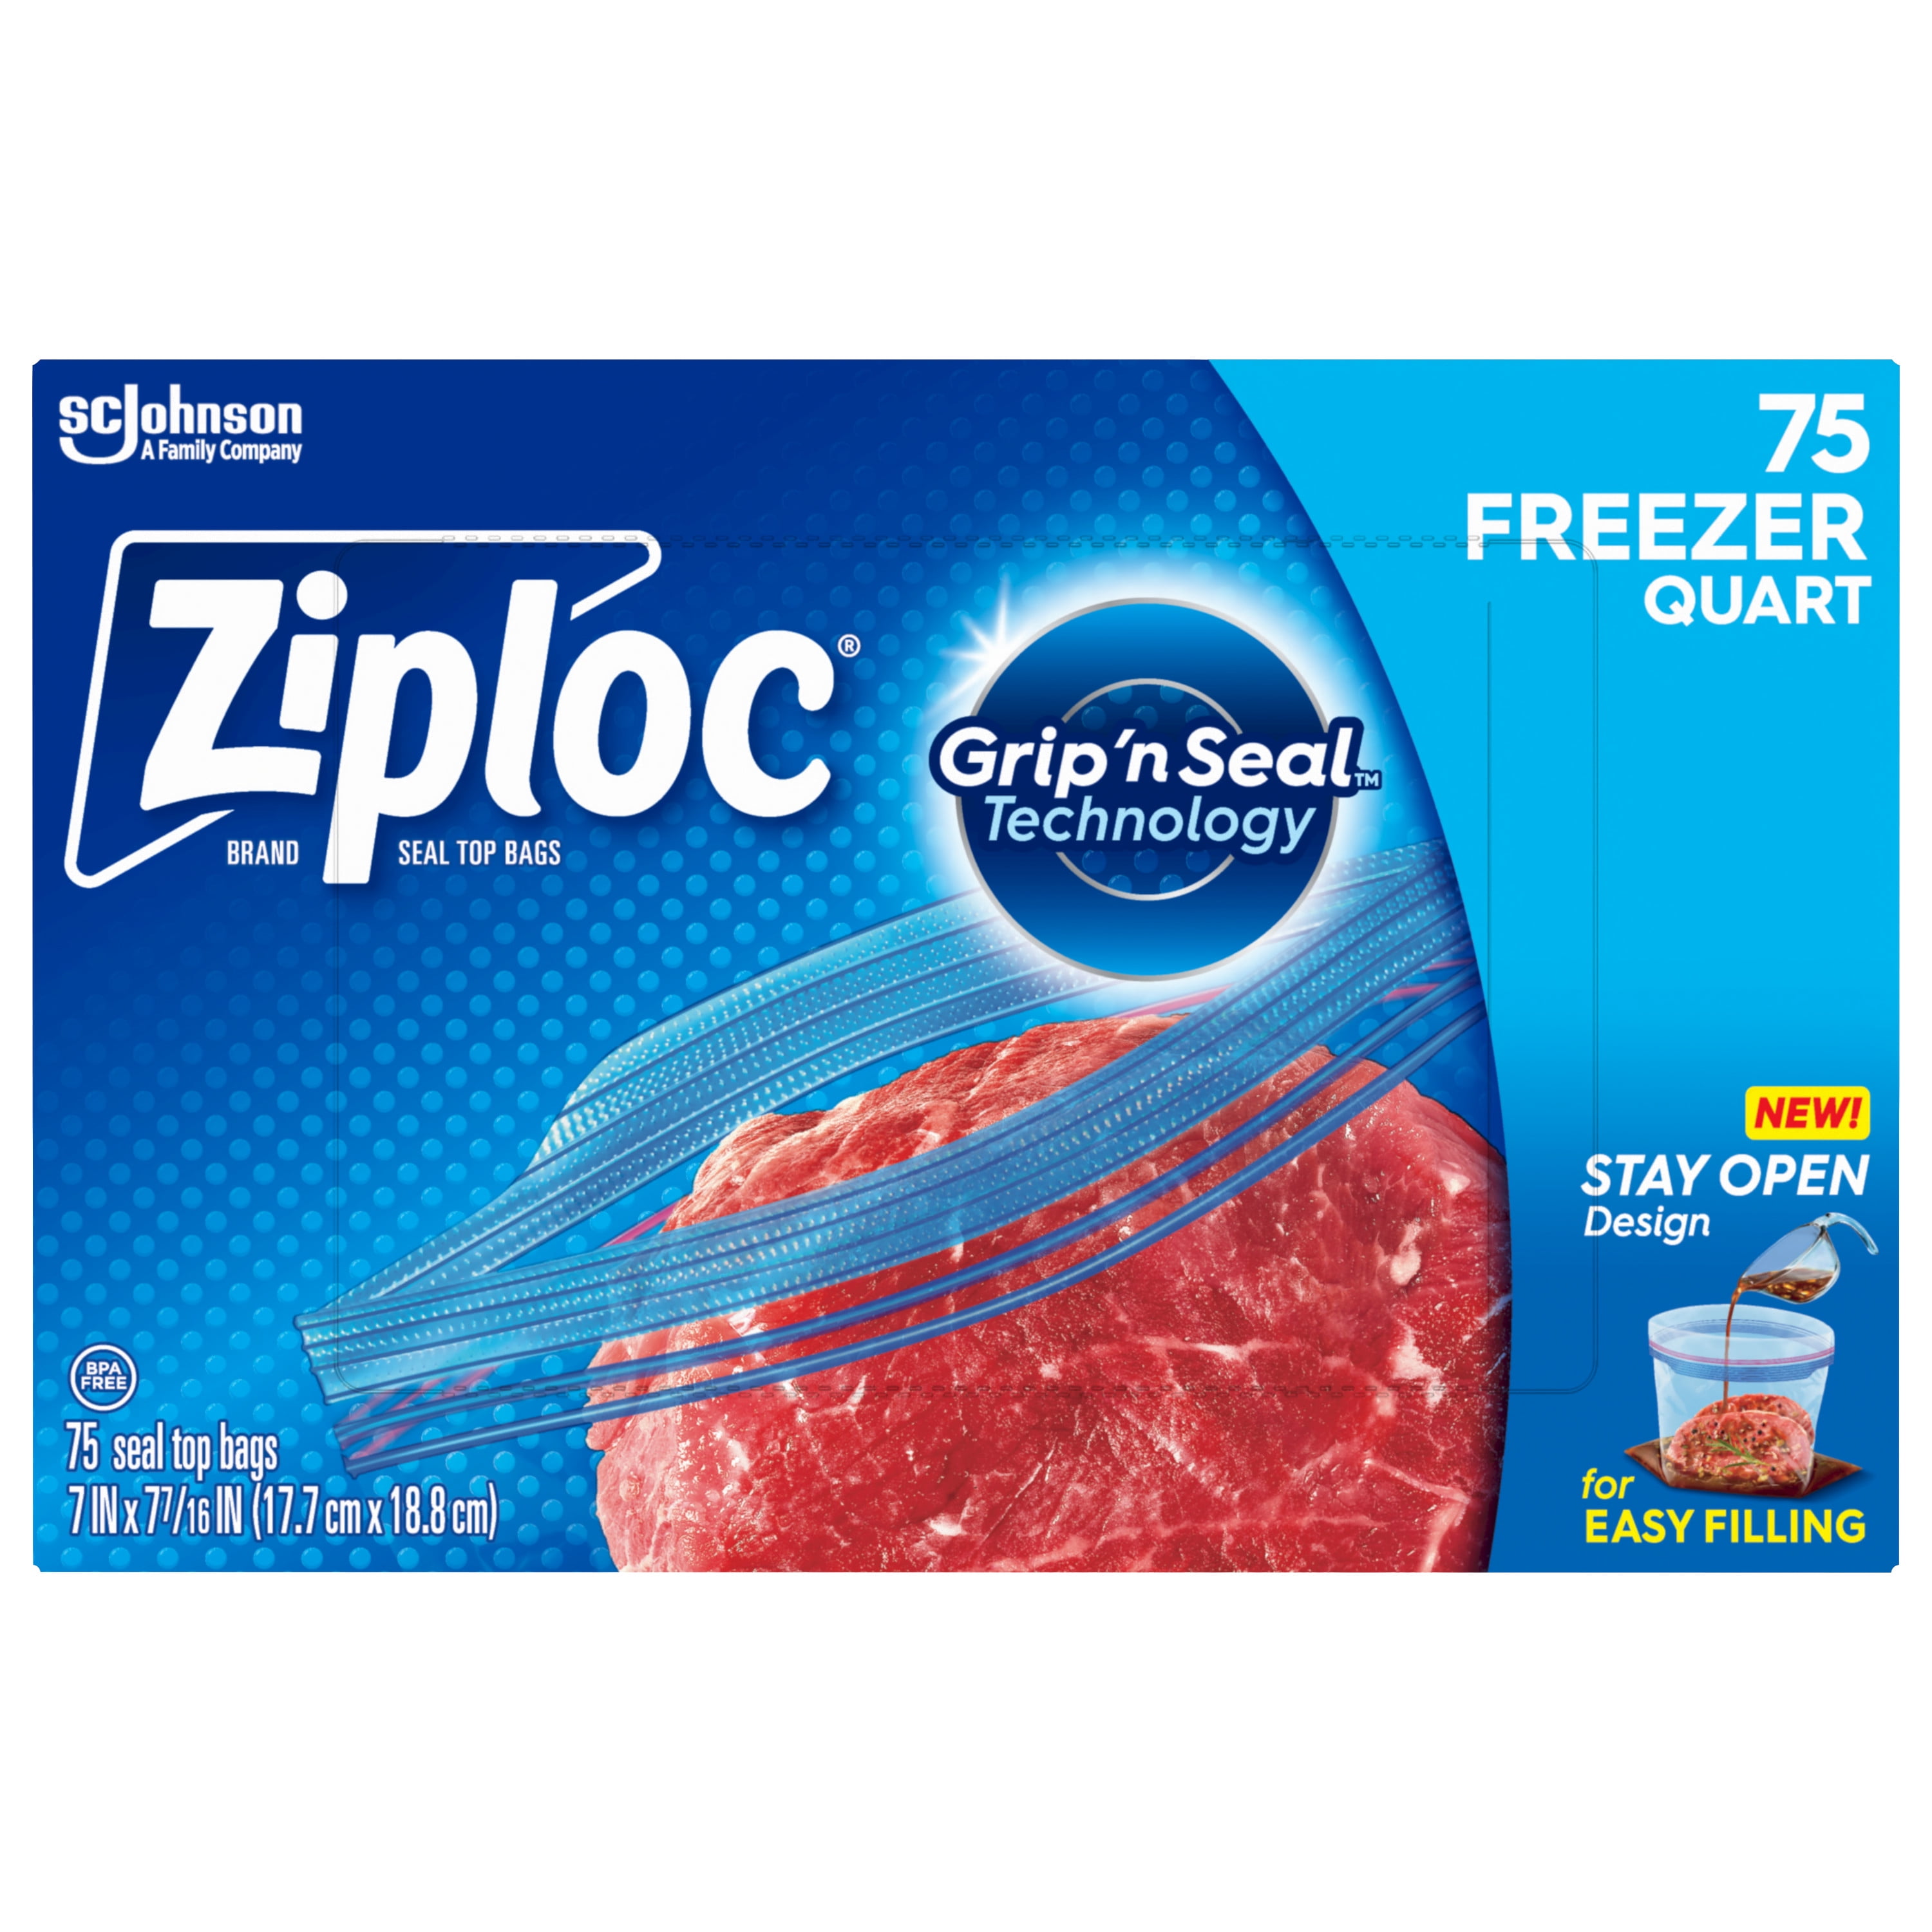 Ziploc Half Gallon Freezer Bags (160 ct.)